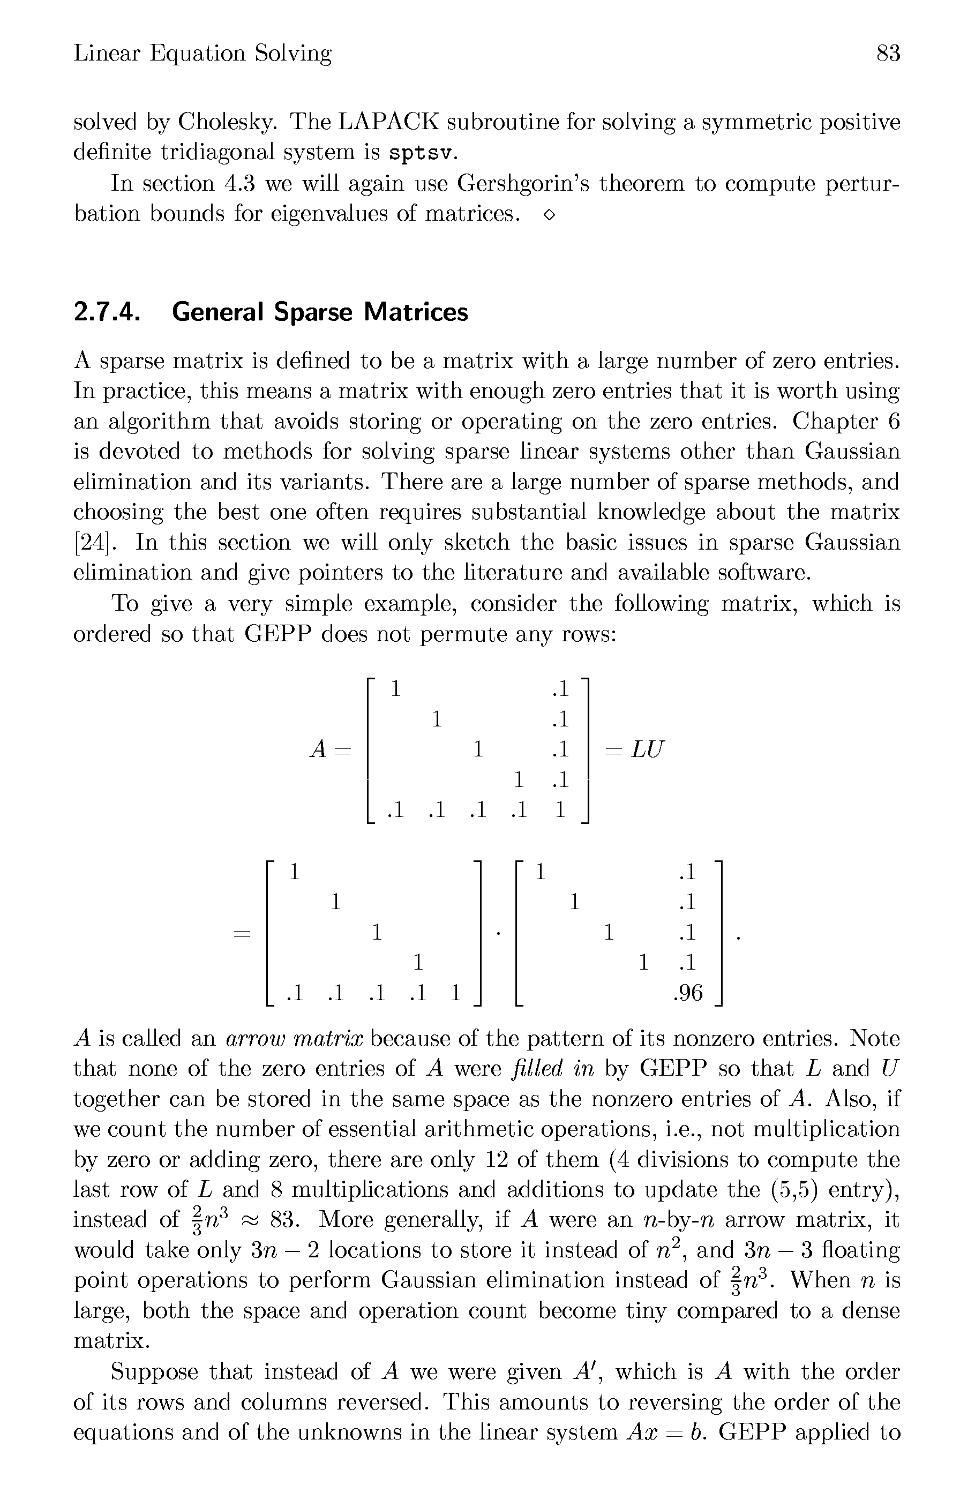 2.7.4 General Sparse Matrices